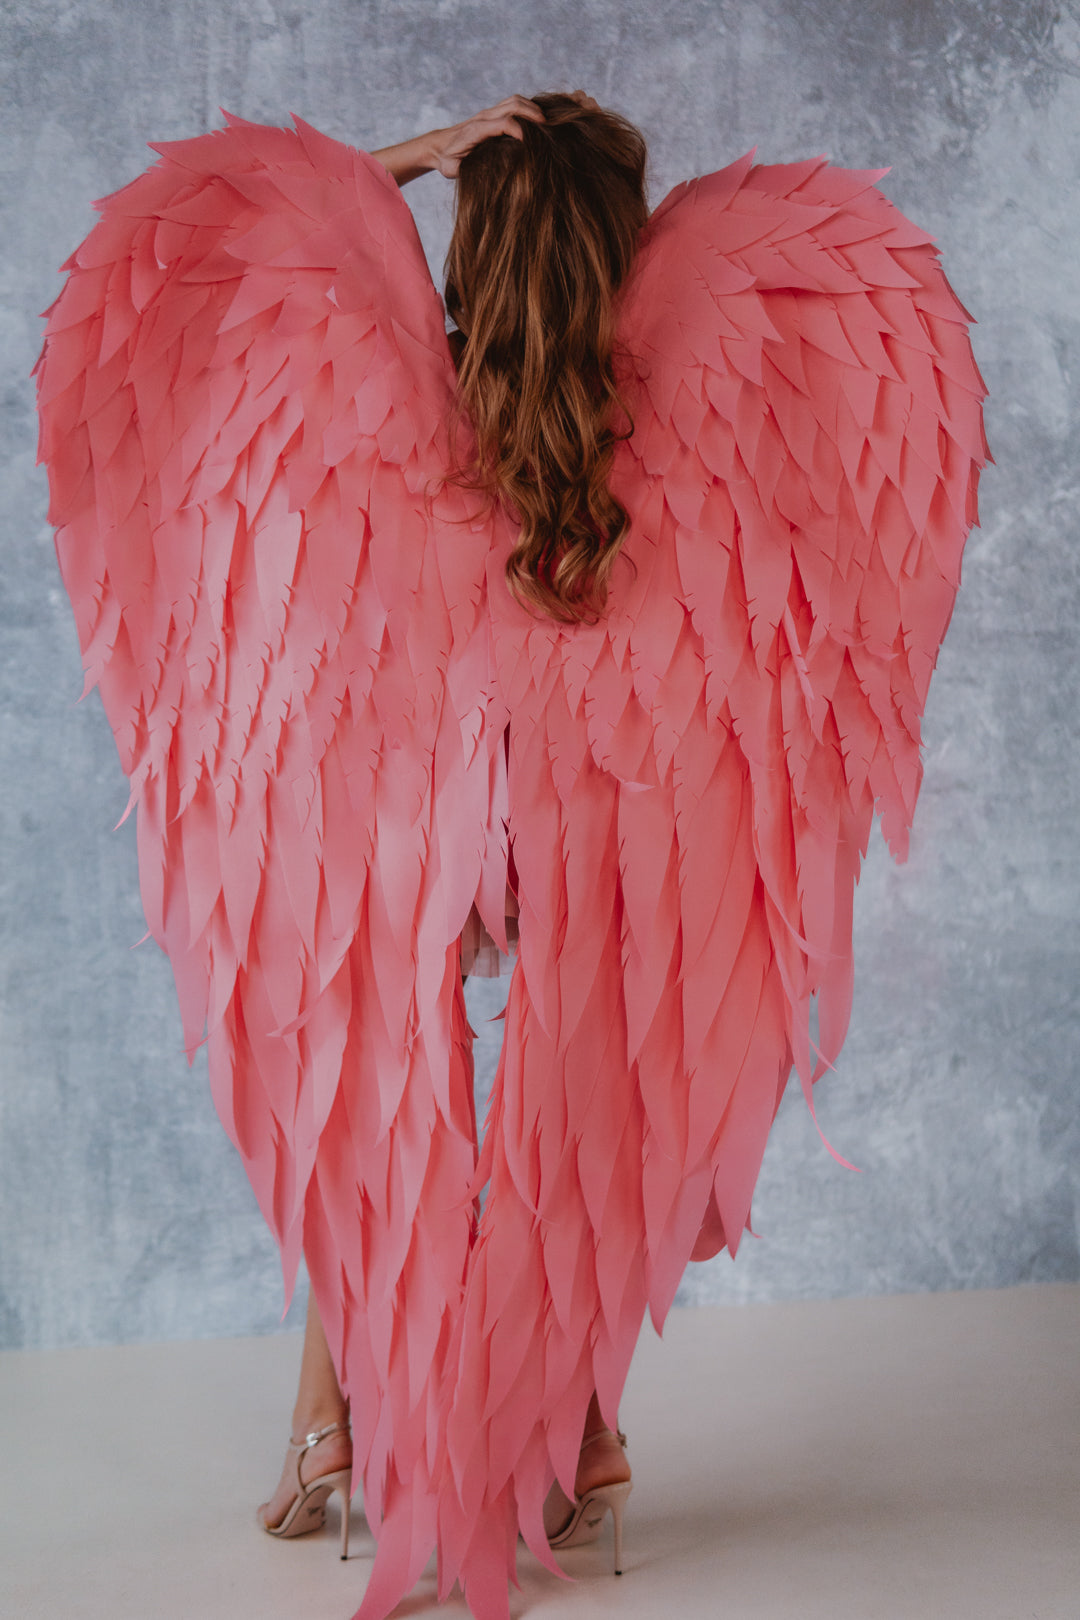 Angel Wings Pink Costume Cosplay "Bogacci brand"